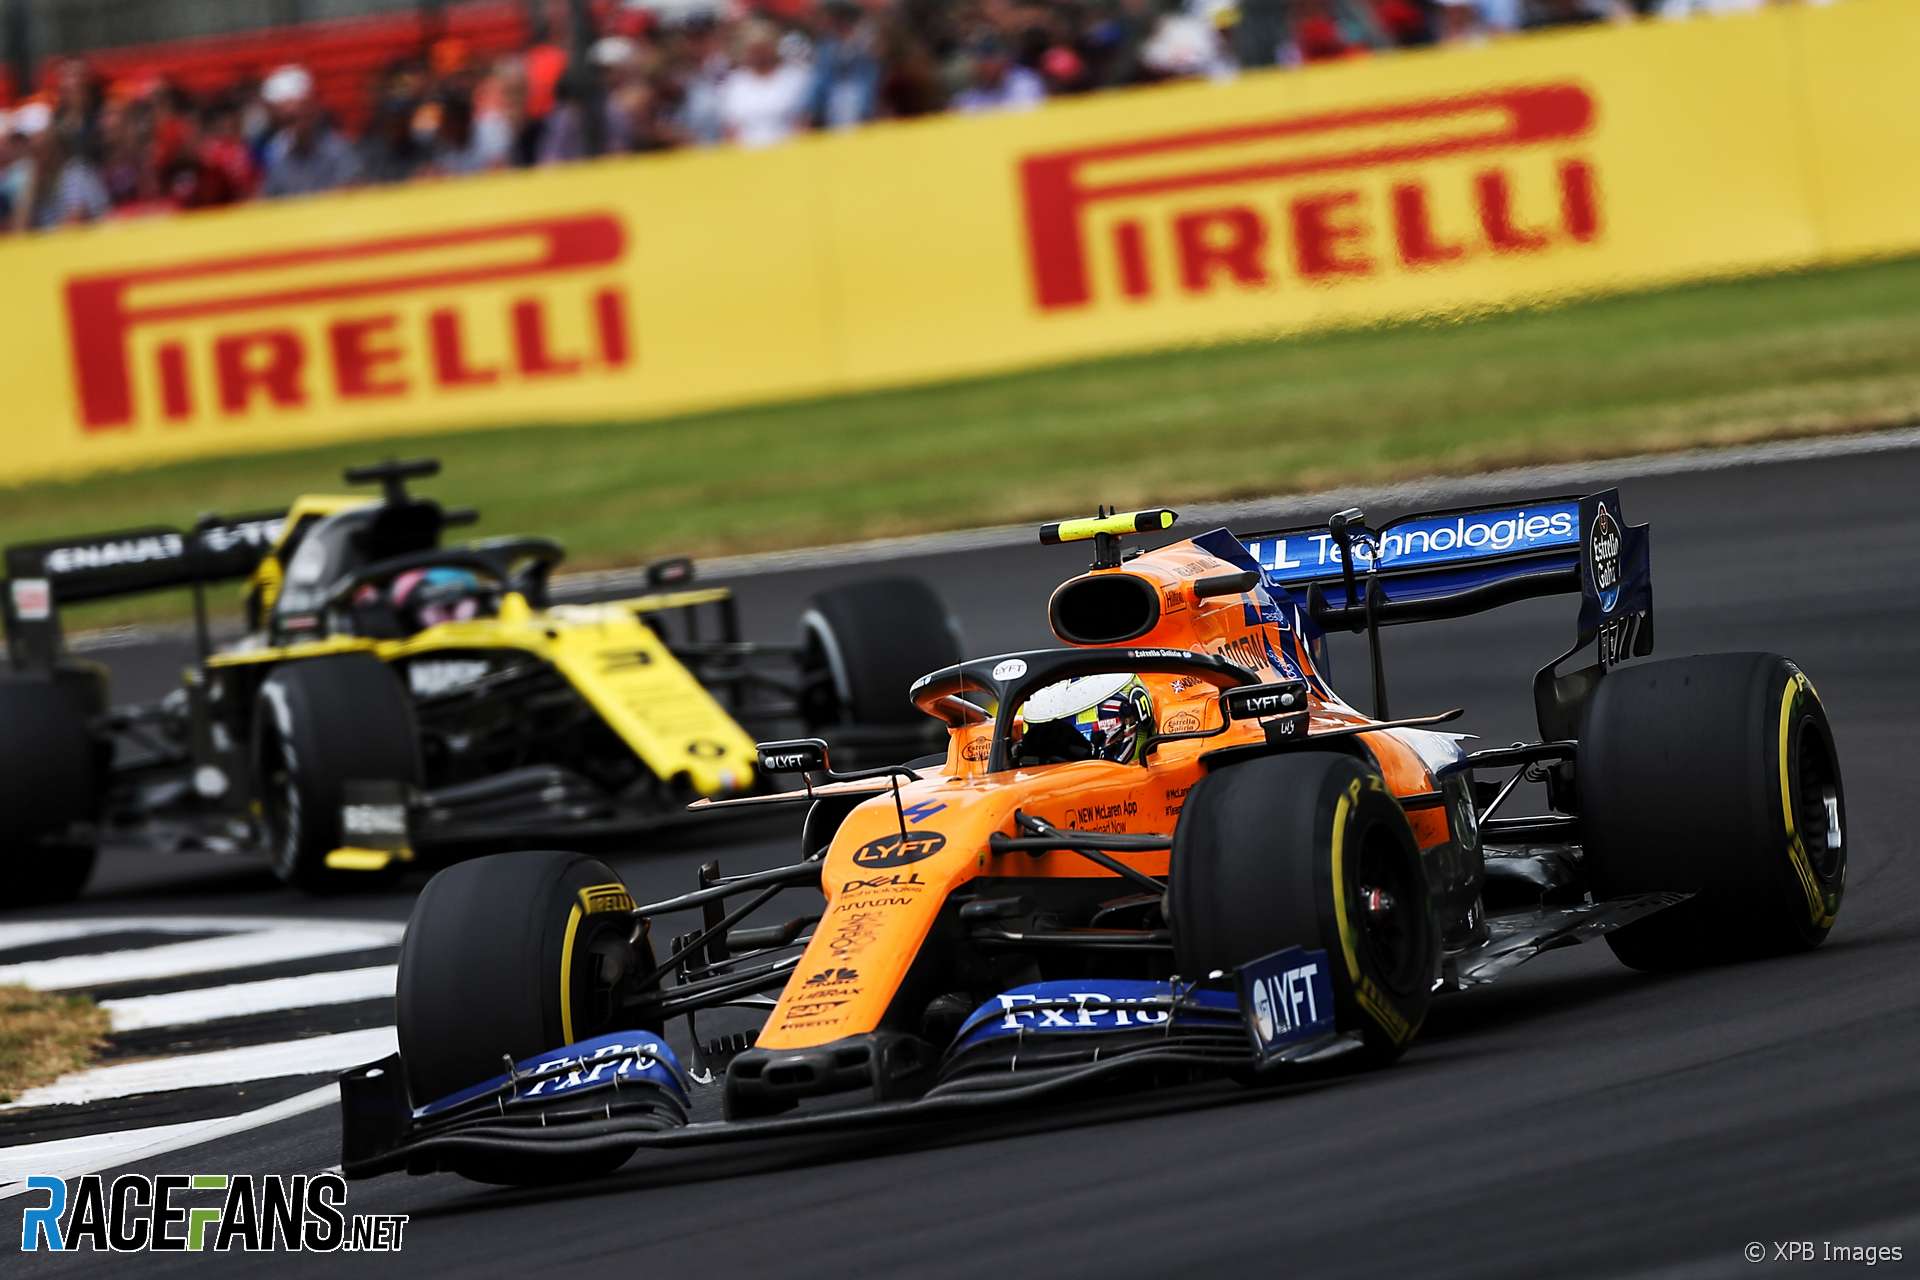 Lando Norris, McLaren, Silverstone, 2019